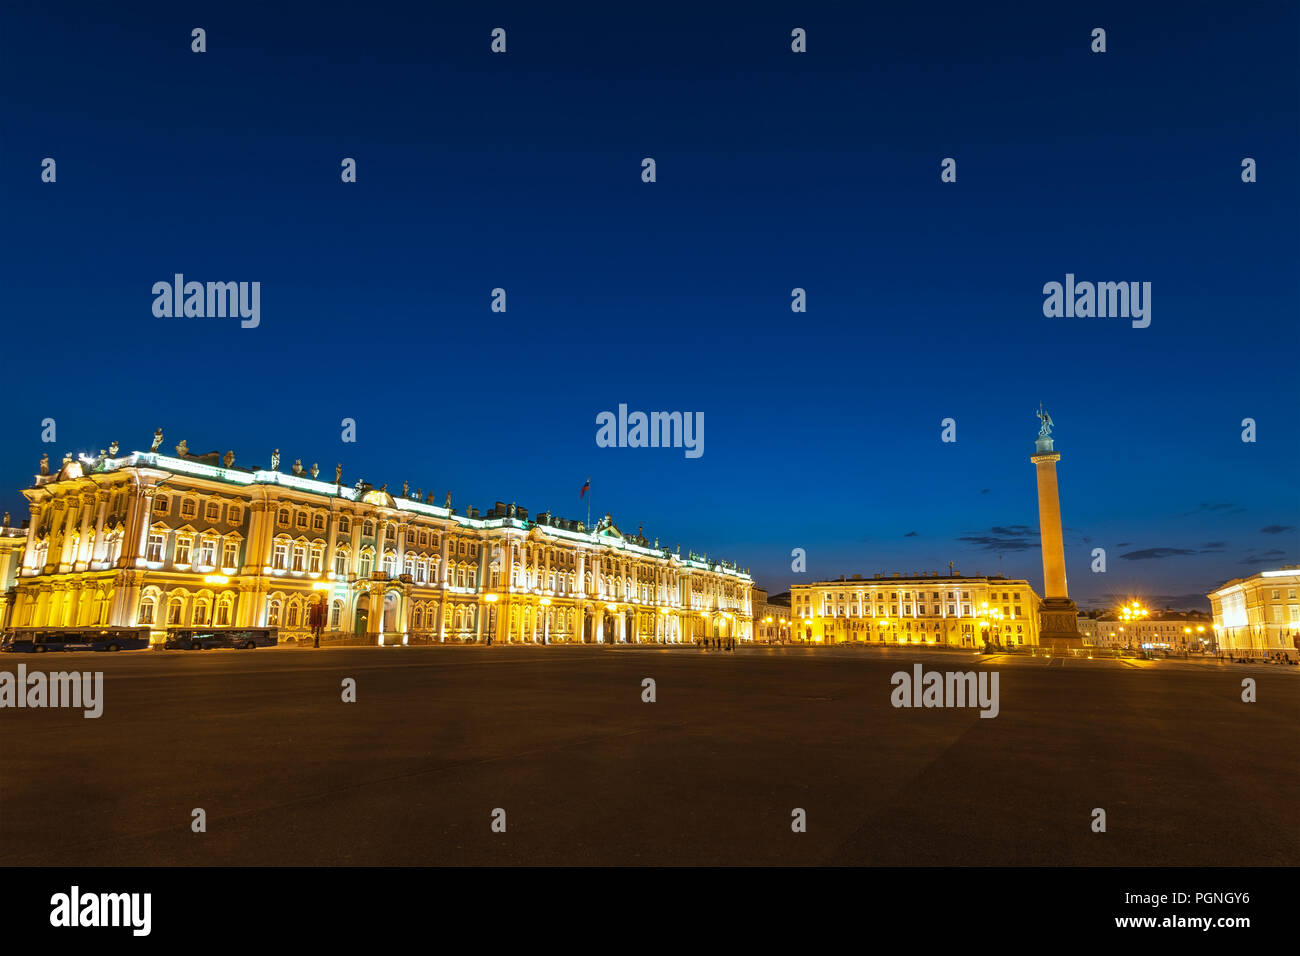 Sankt Petersburg Night City Skyline am Schlossplatz, Sankt Petersburg Russland Stockfoto